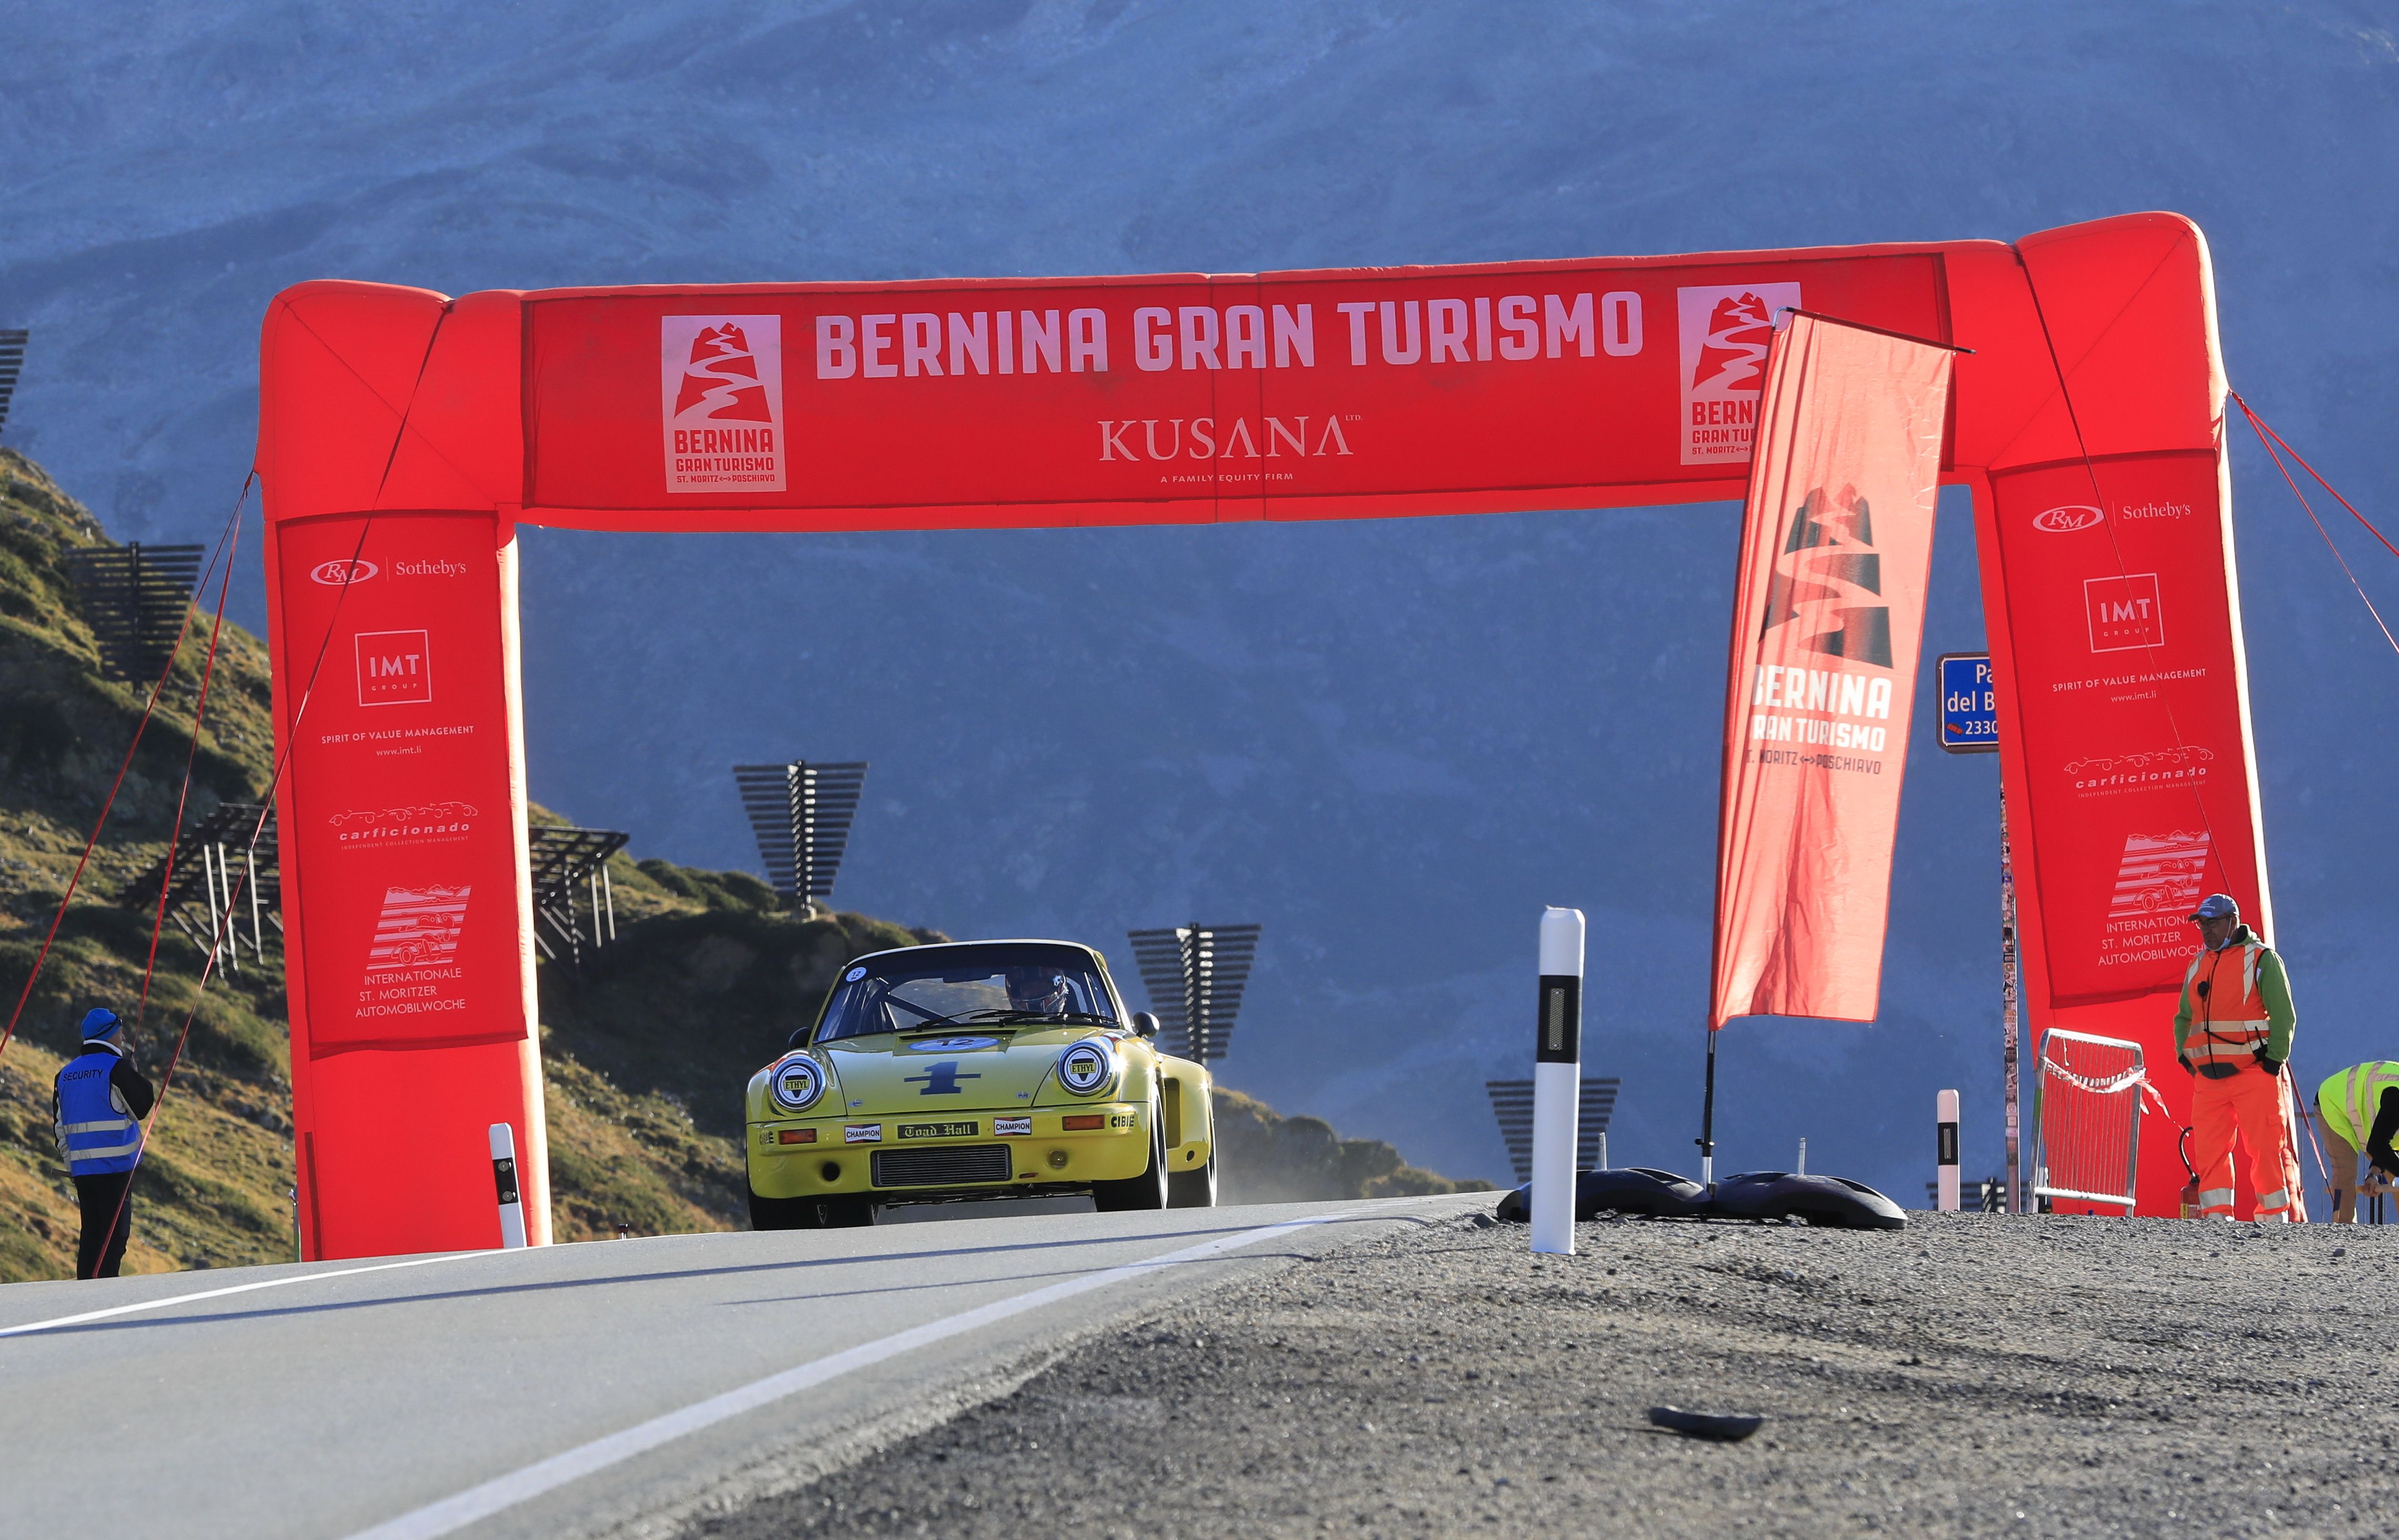 Bernina Gran Turismo 2021